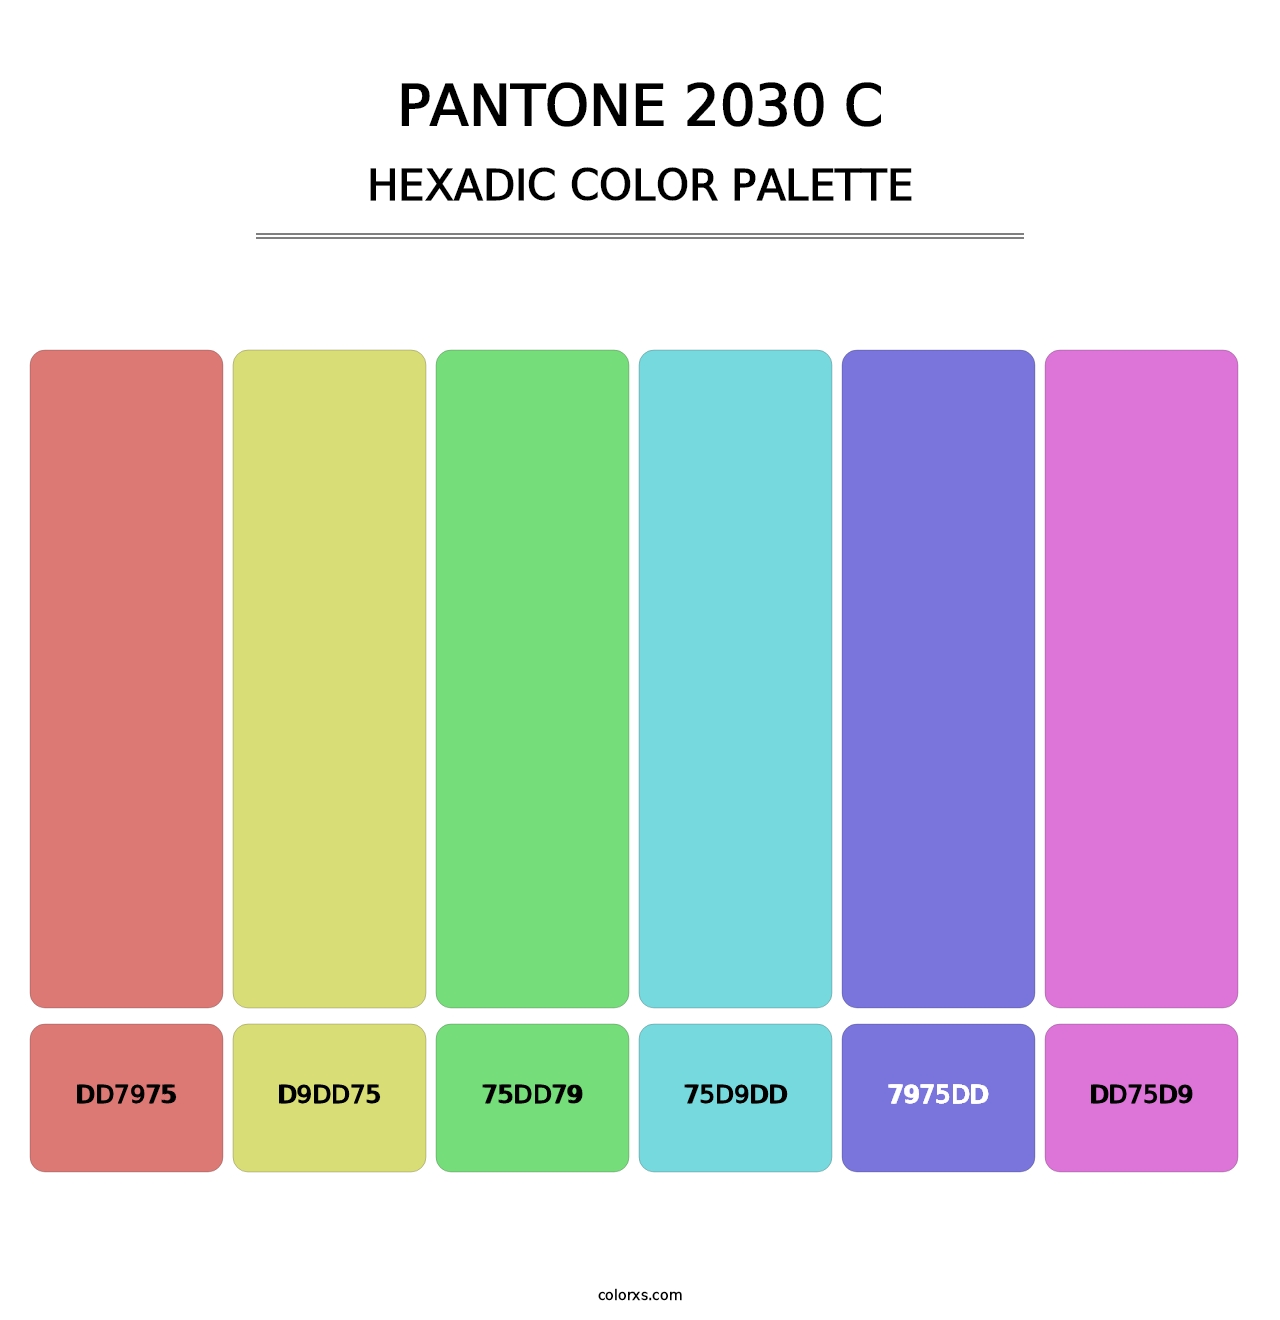 PANTONE 2030 C - Hexadic Color Palette